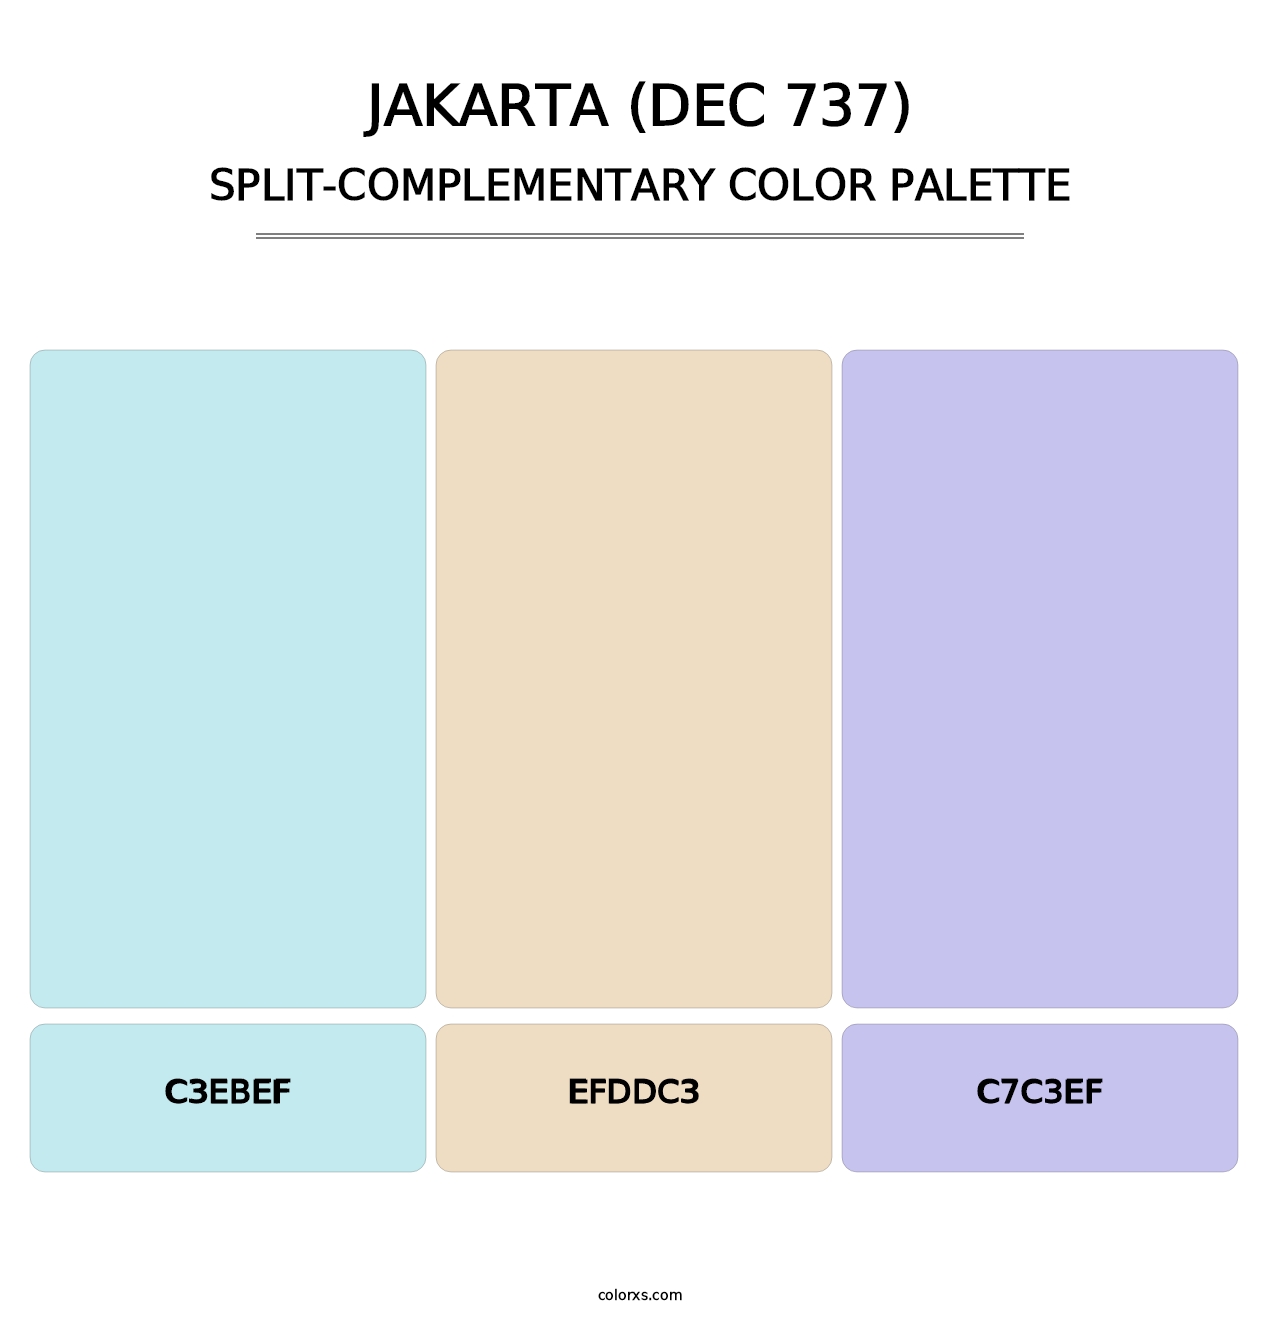 Jakarta (DEC 737) - Split-Complementary Color Palette